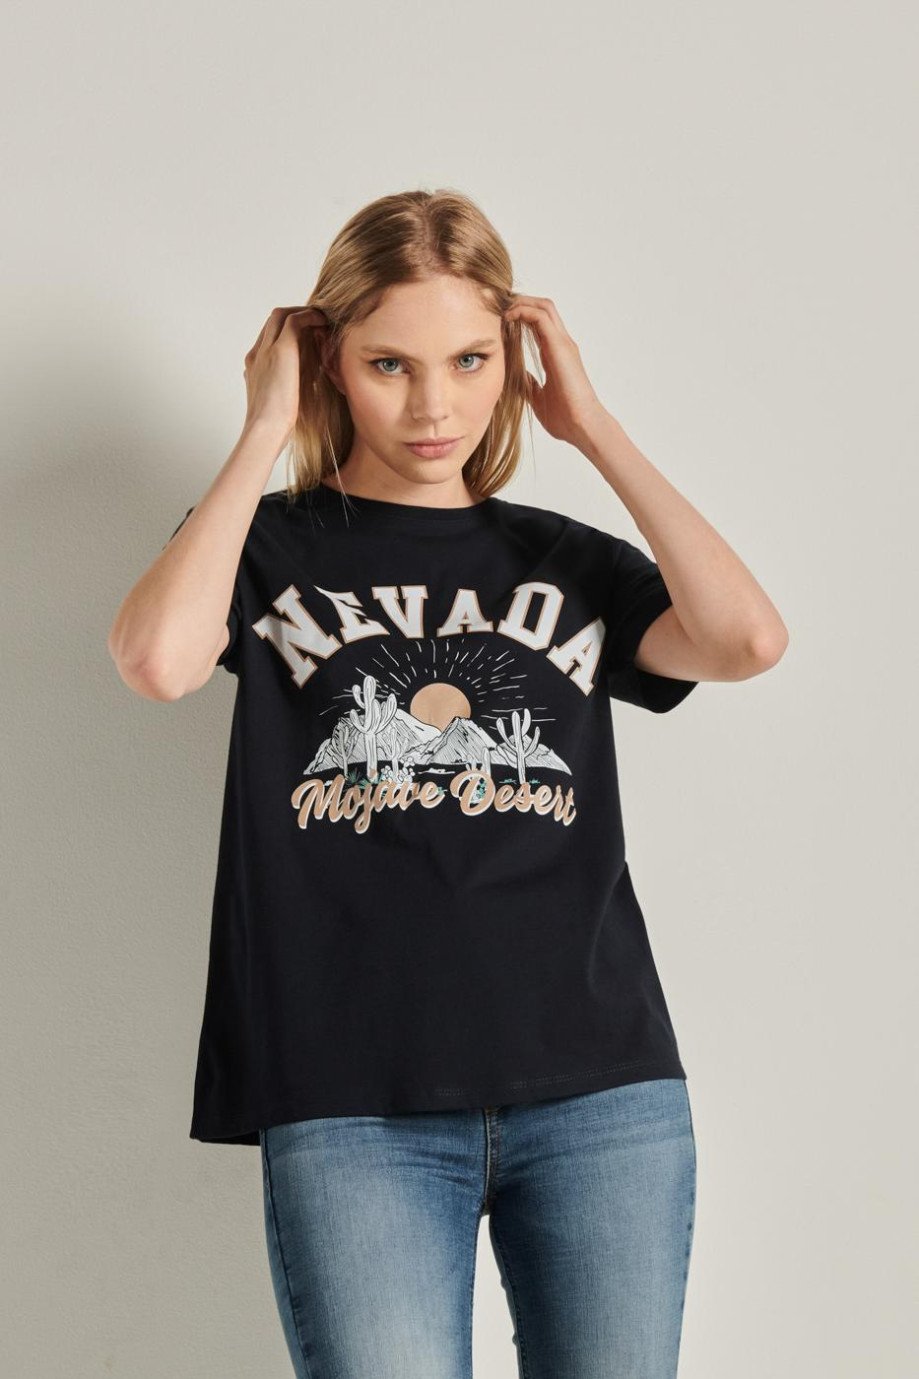 Camiseta manga corta unicolor con diseño college de Nevada